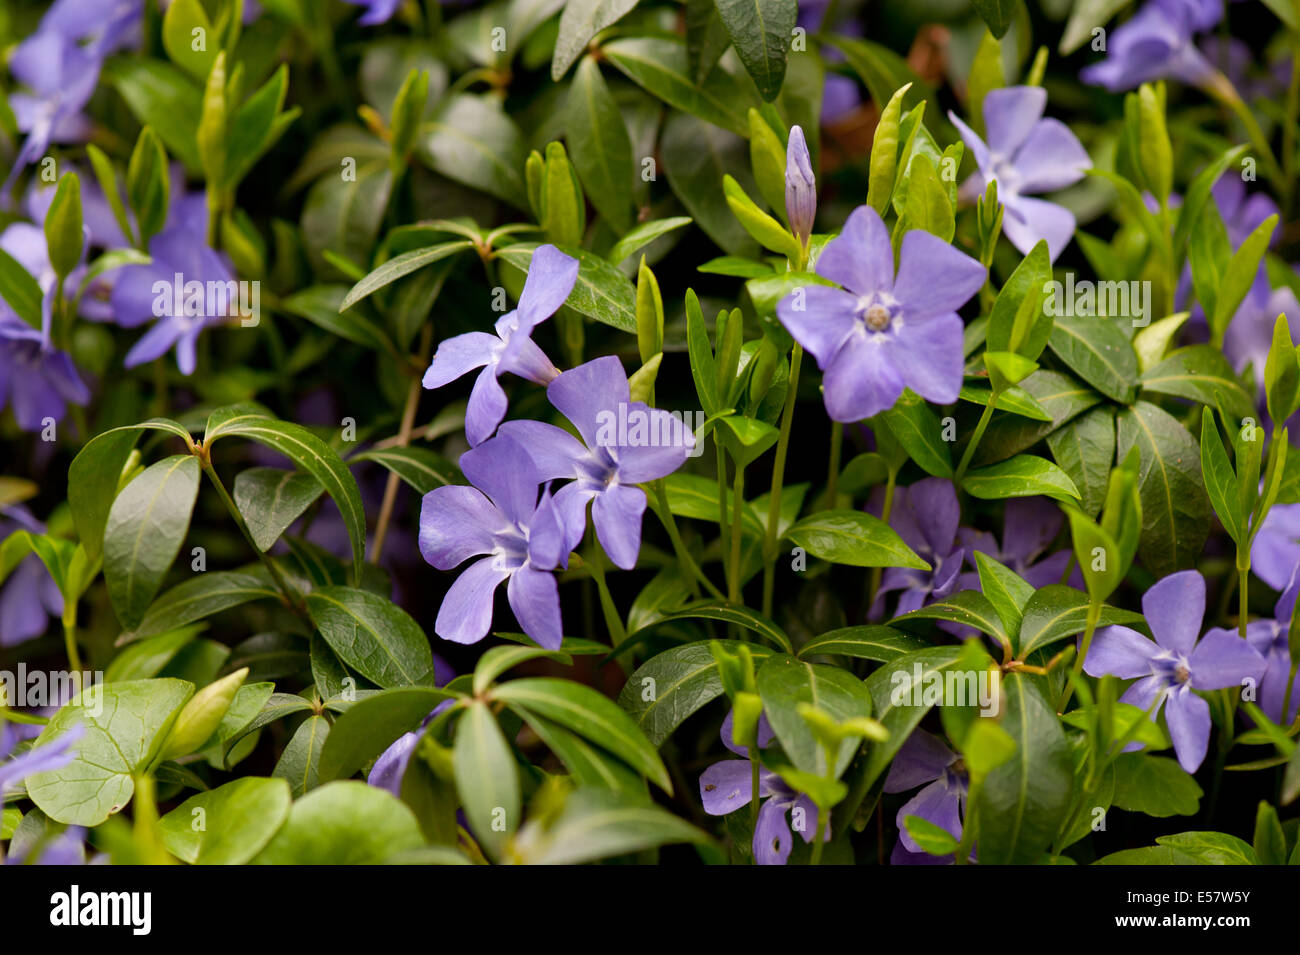 Purple Vinca or Periwinkle flowers Stock Photo